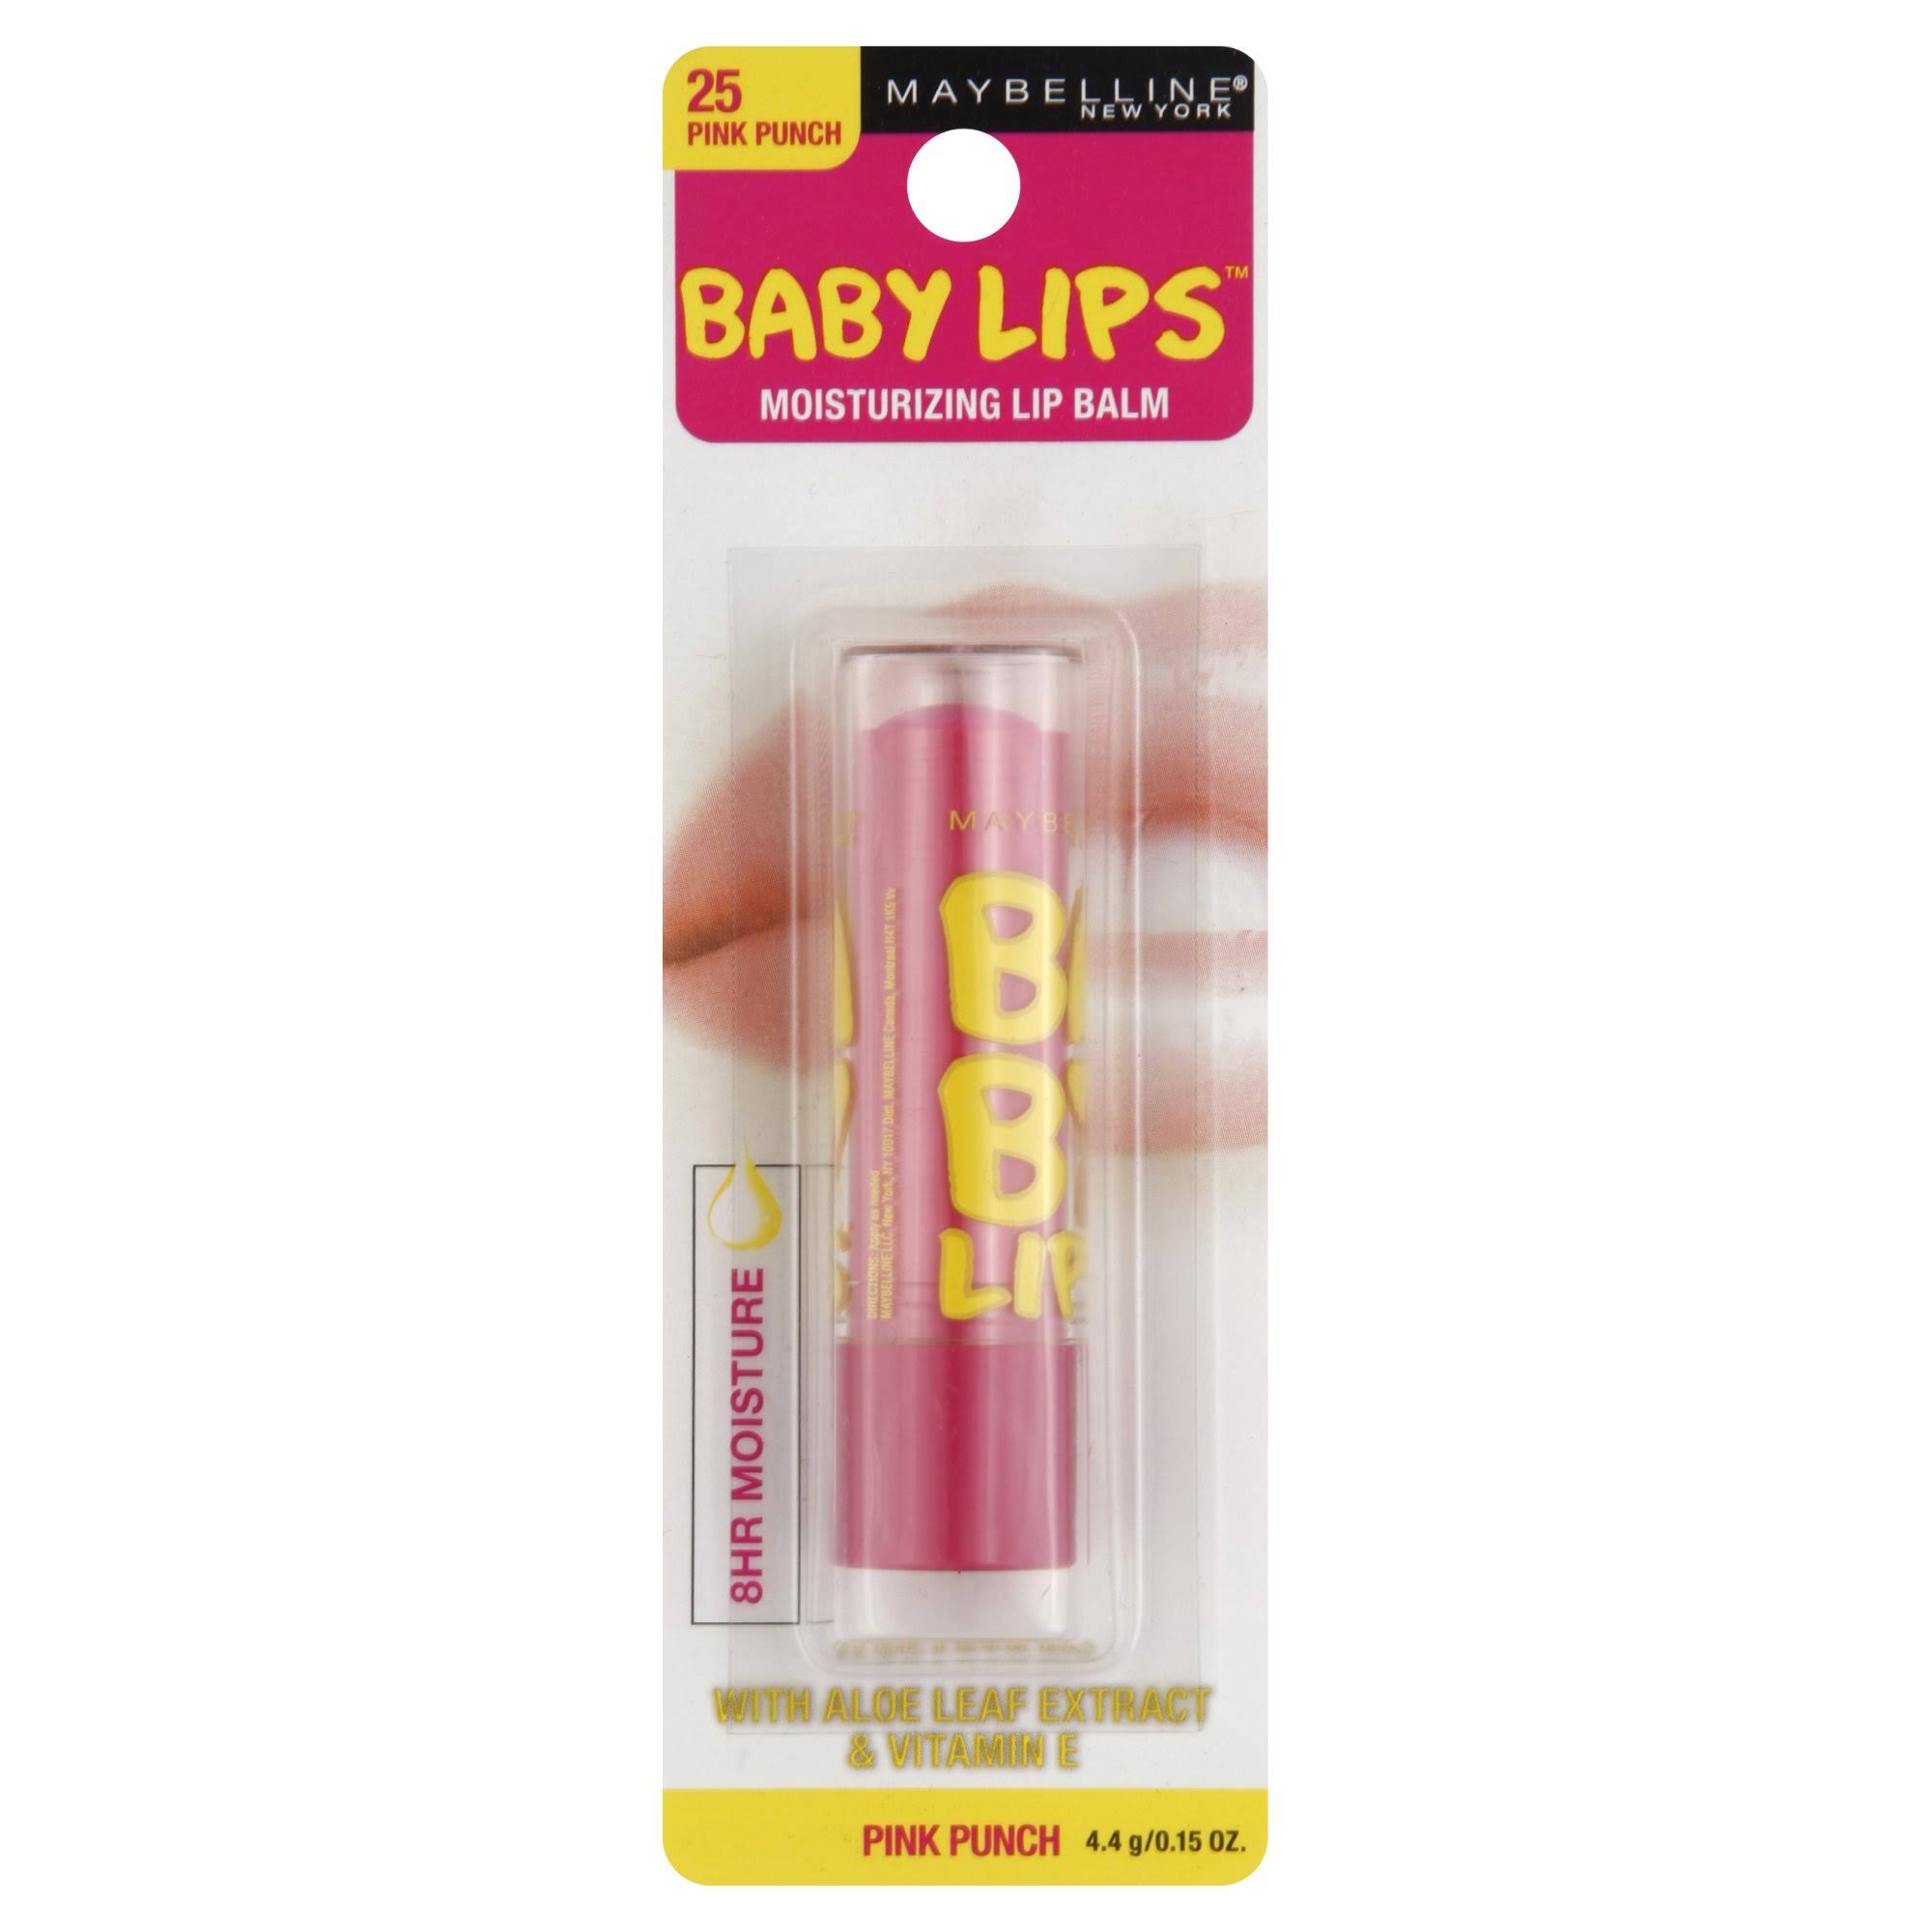 Maybelline Baby Lips Moisturizing Lip Balm - 25 Pink Punch, 4.4g